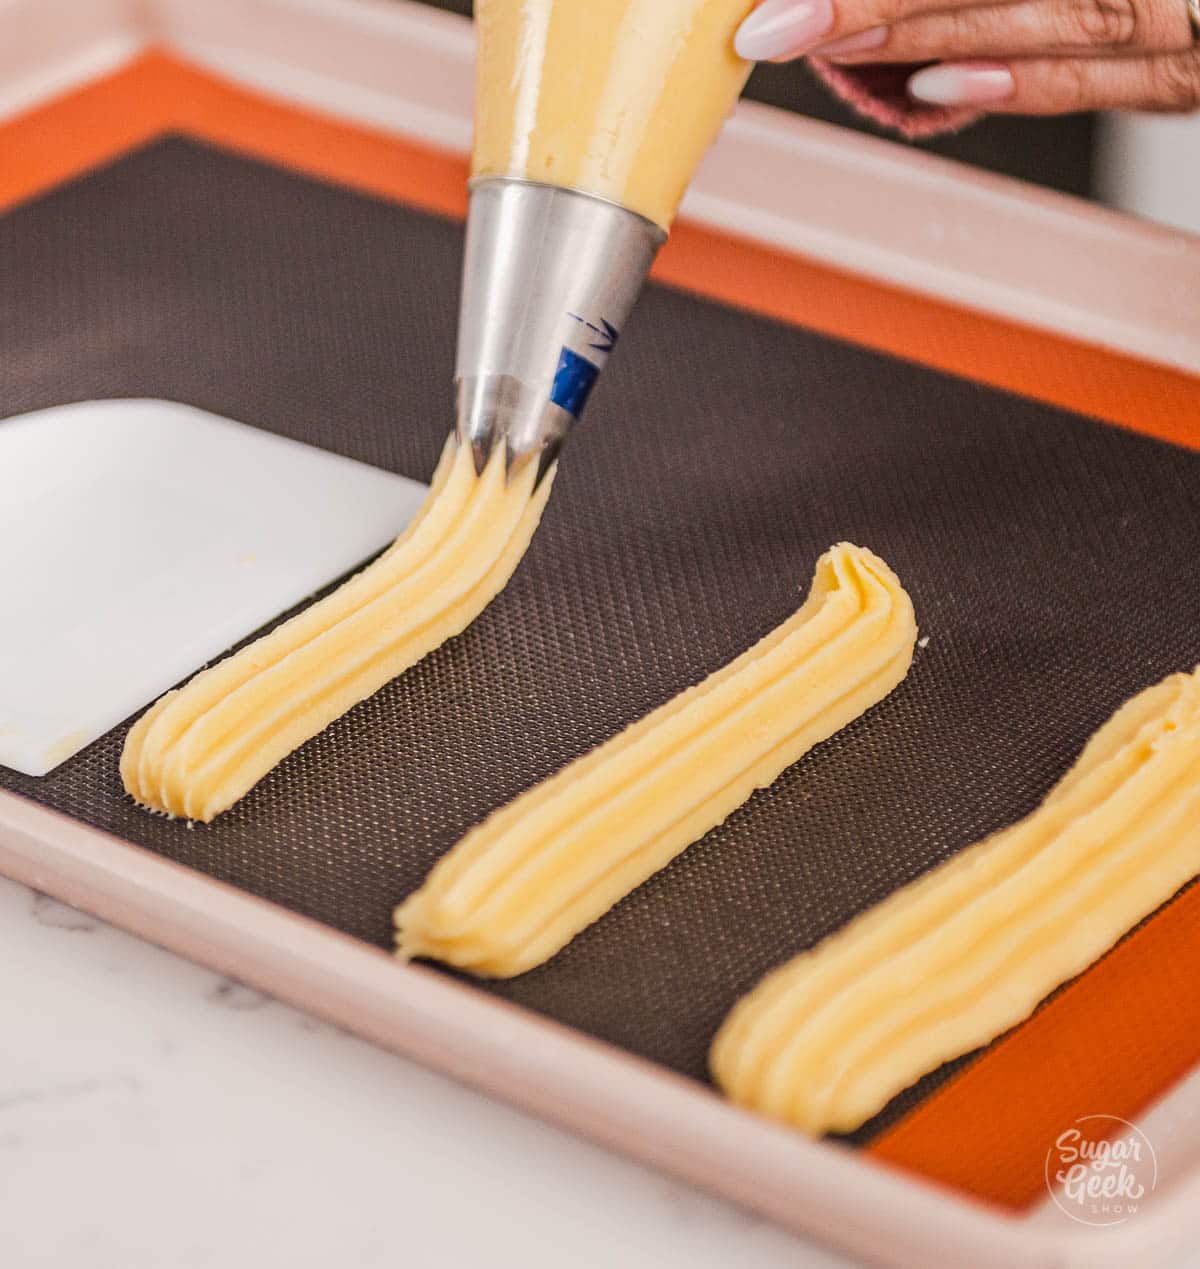 piping the choux dough into uniform lengths on a silpain mat.